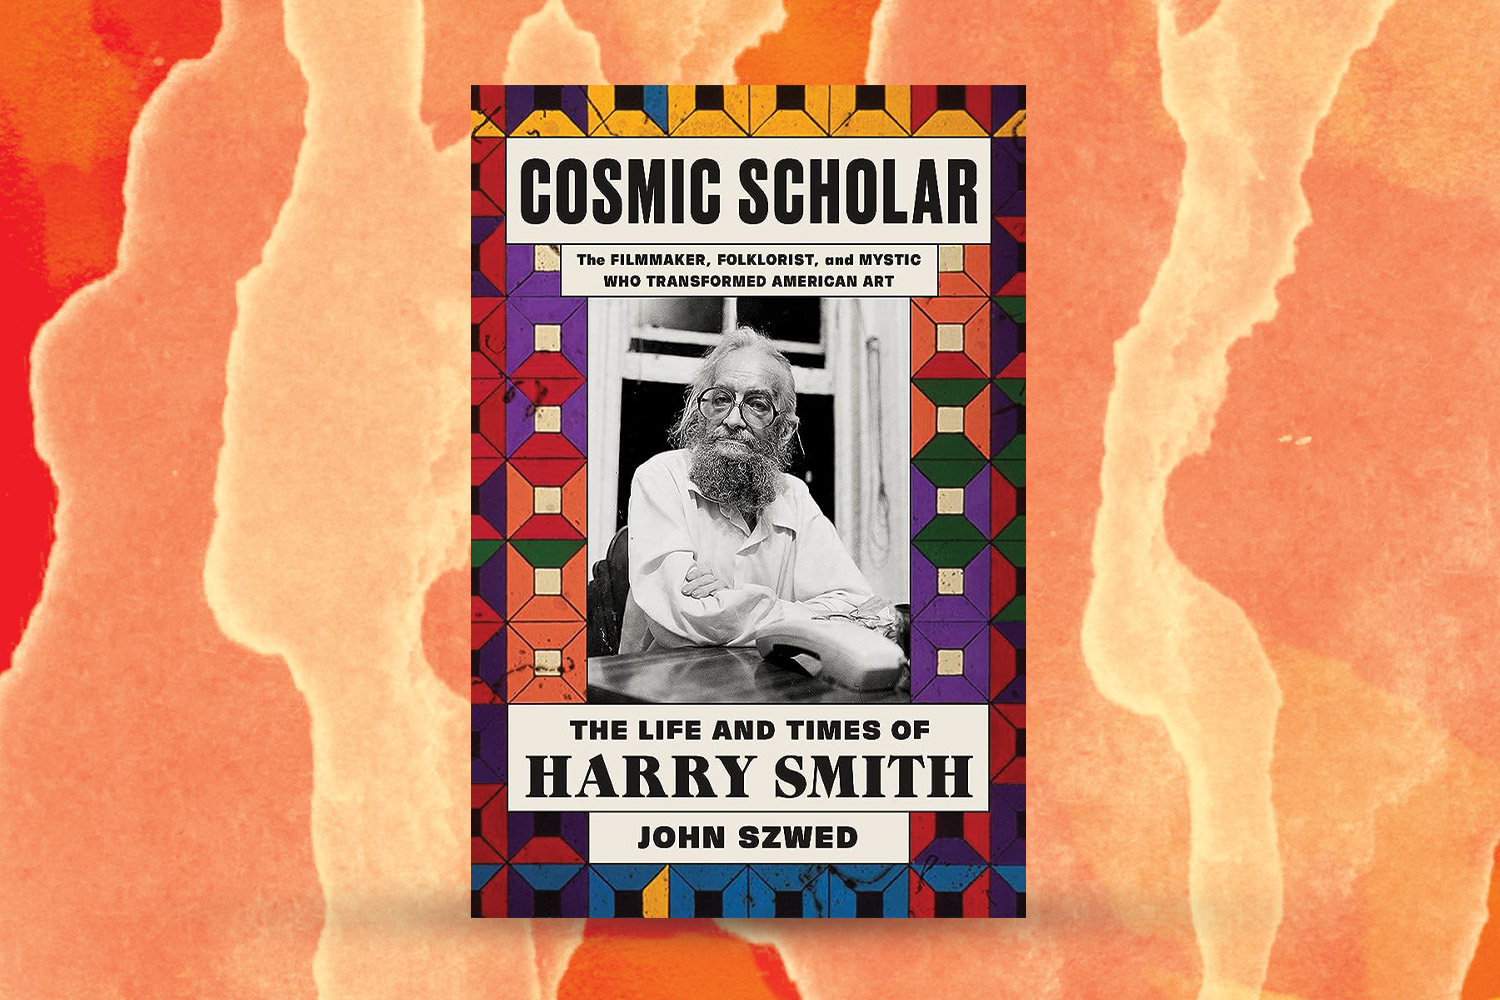 "Cosmic Scholar" cover